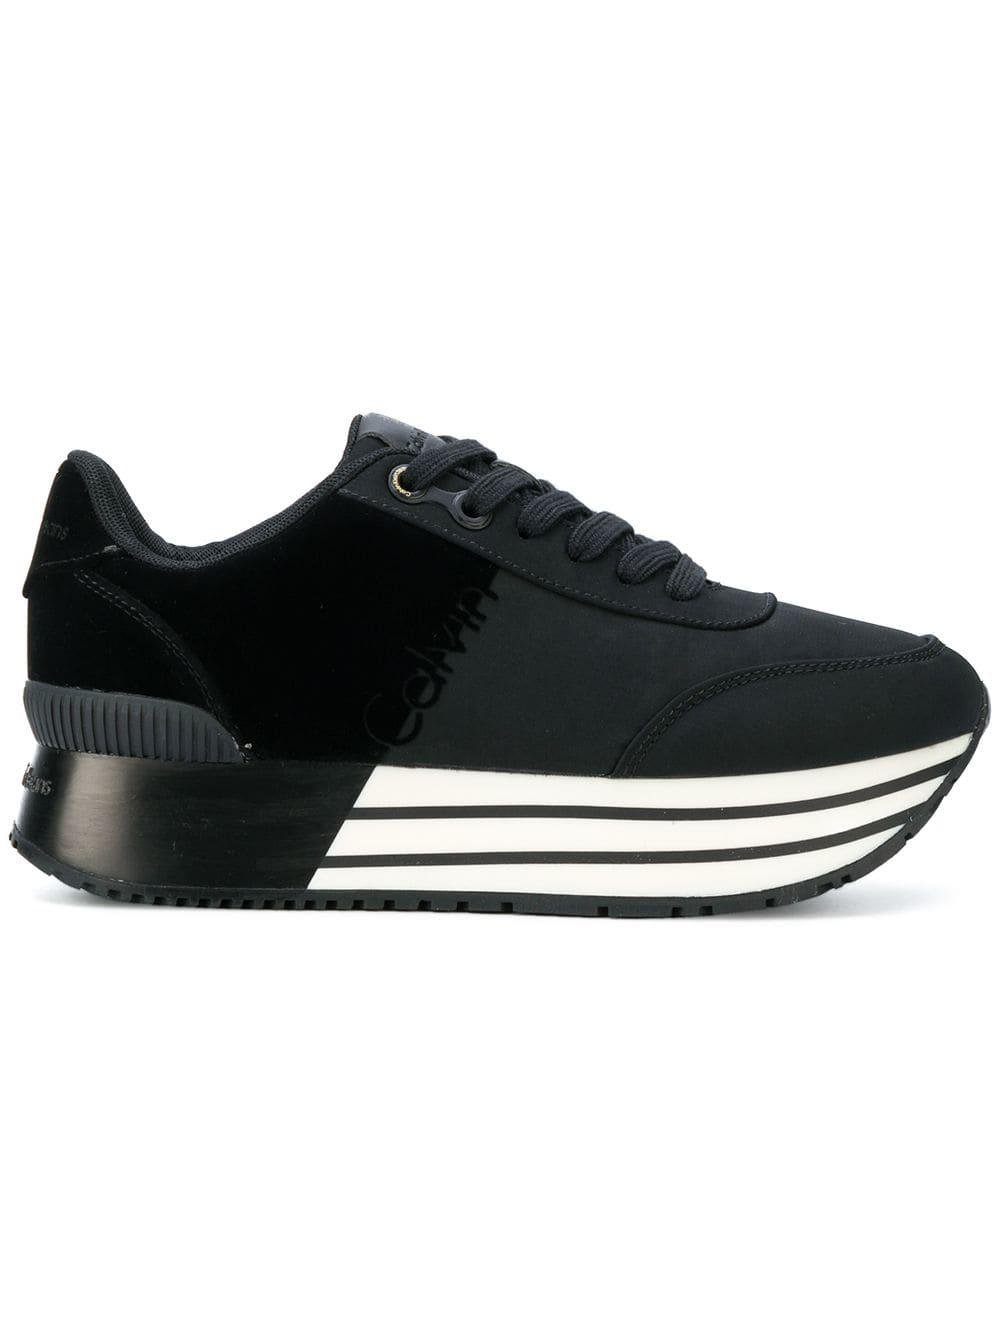 Calvin Klein Denim Striped Sole Platform Sneakers in Black | Lyst